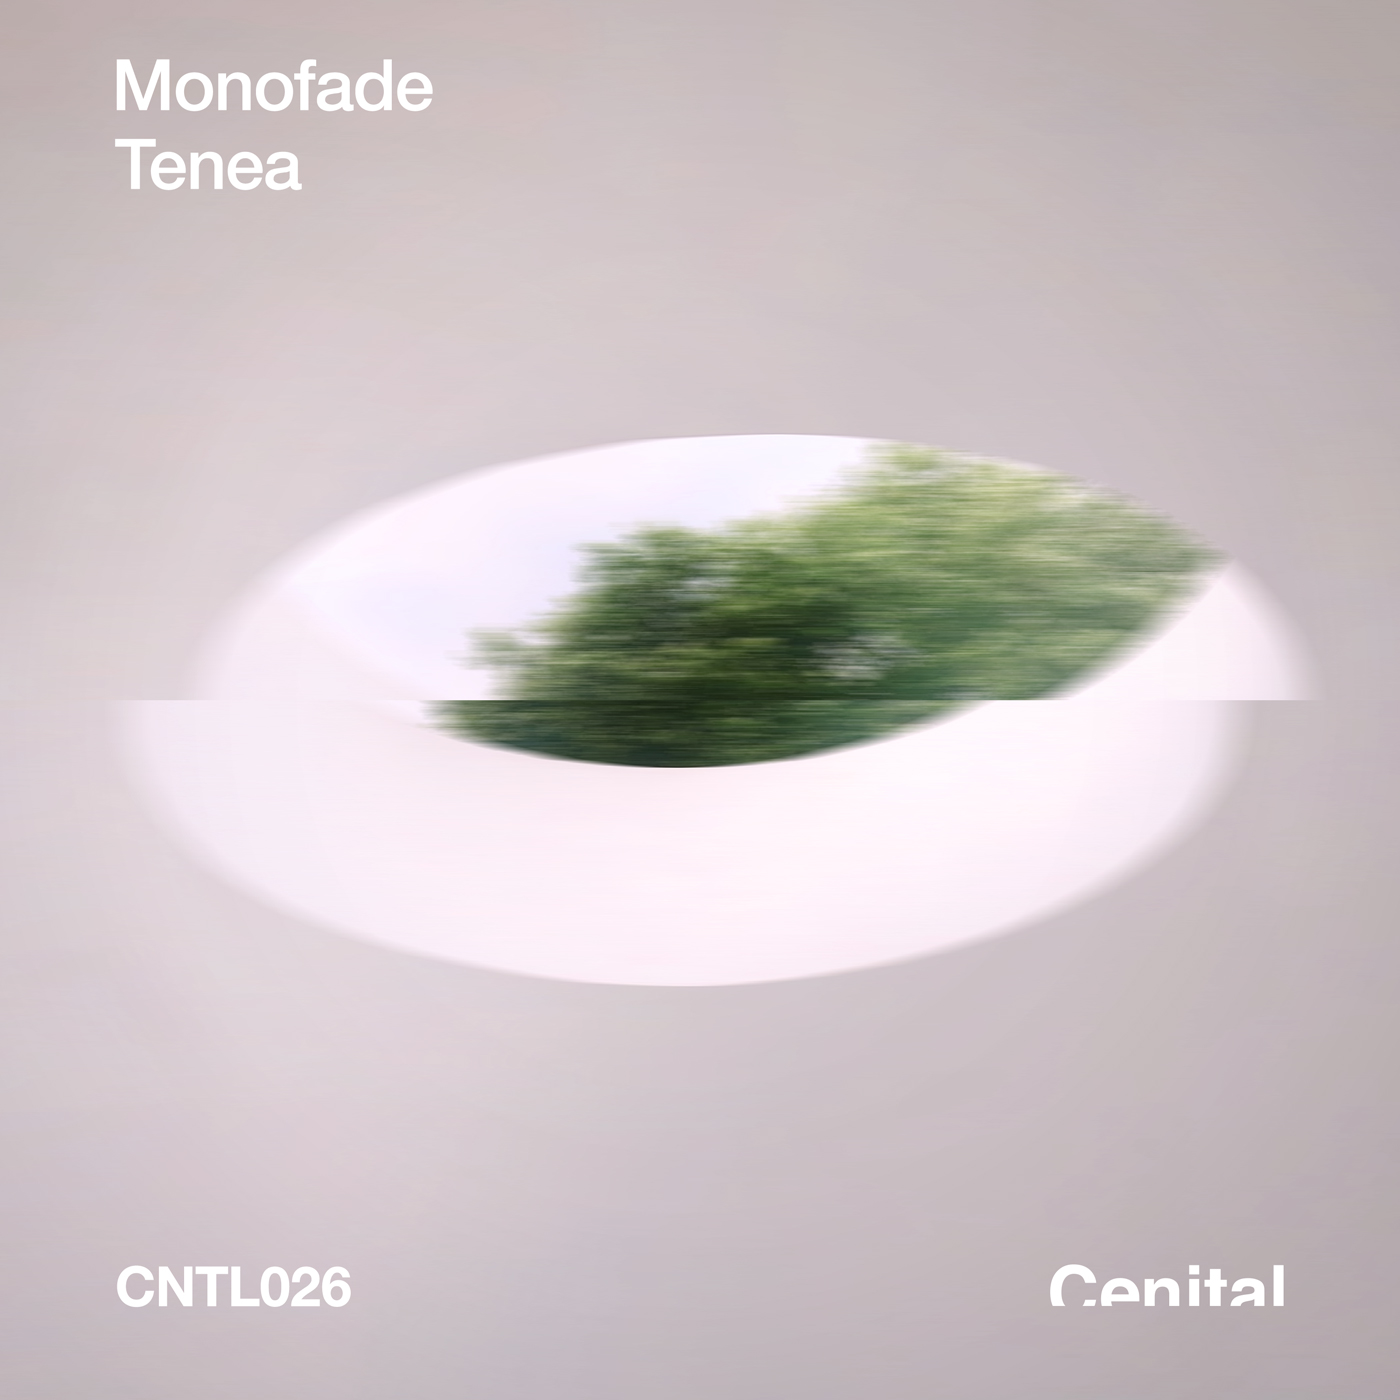 Monofade – Tenea [CNTL026]